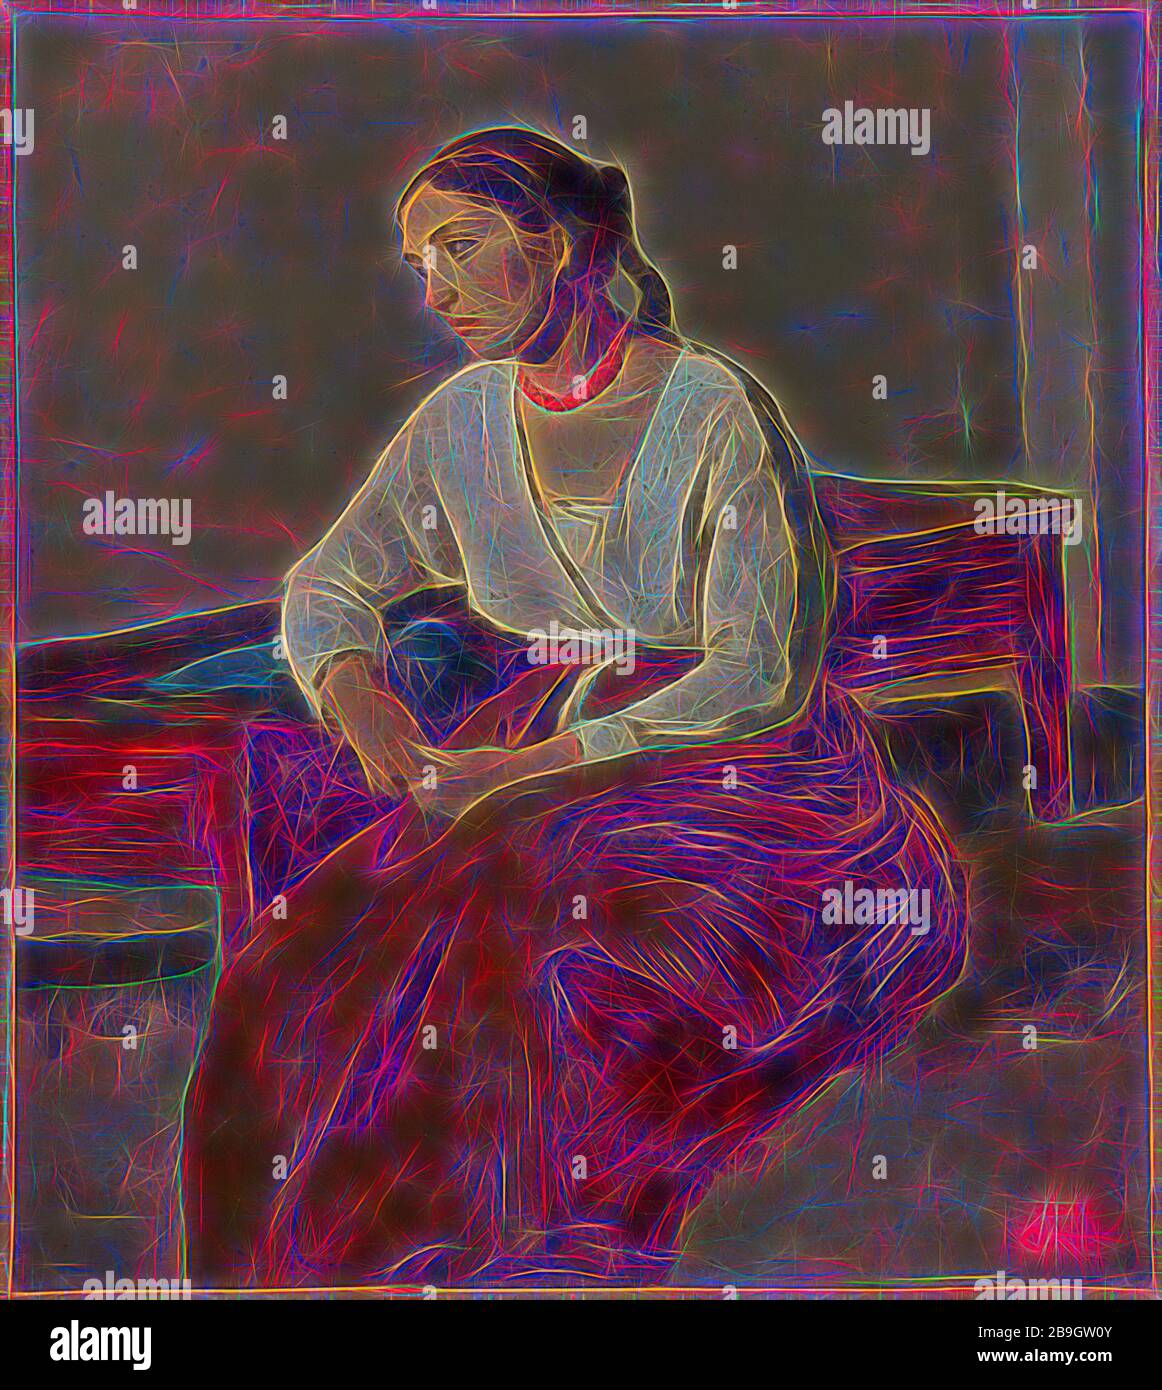 Corot camille woman fotografías e imágenes de alta resolución - Página 2 -  Alamy